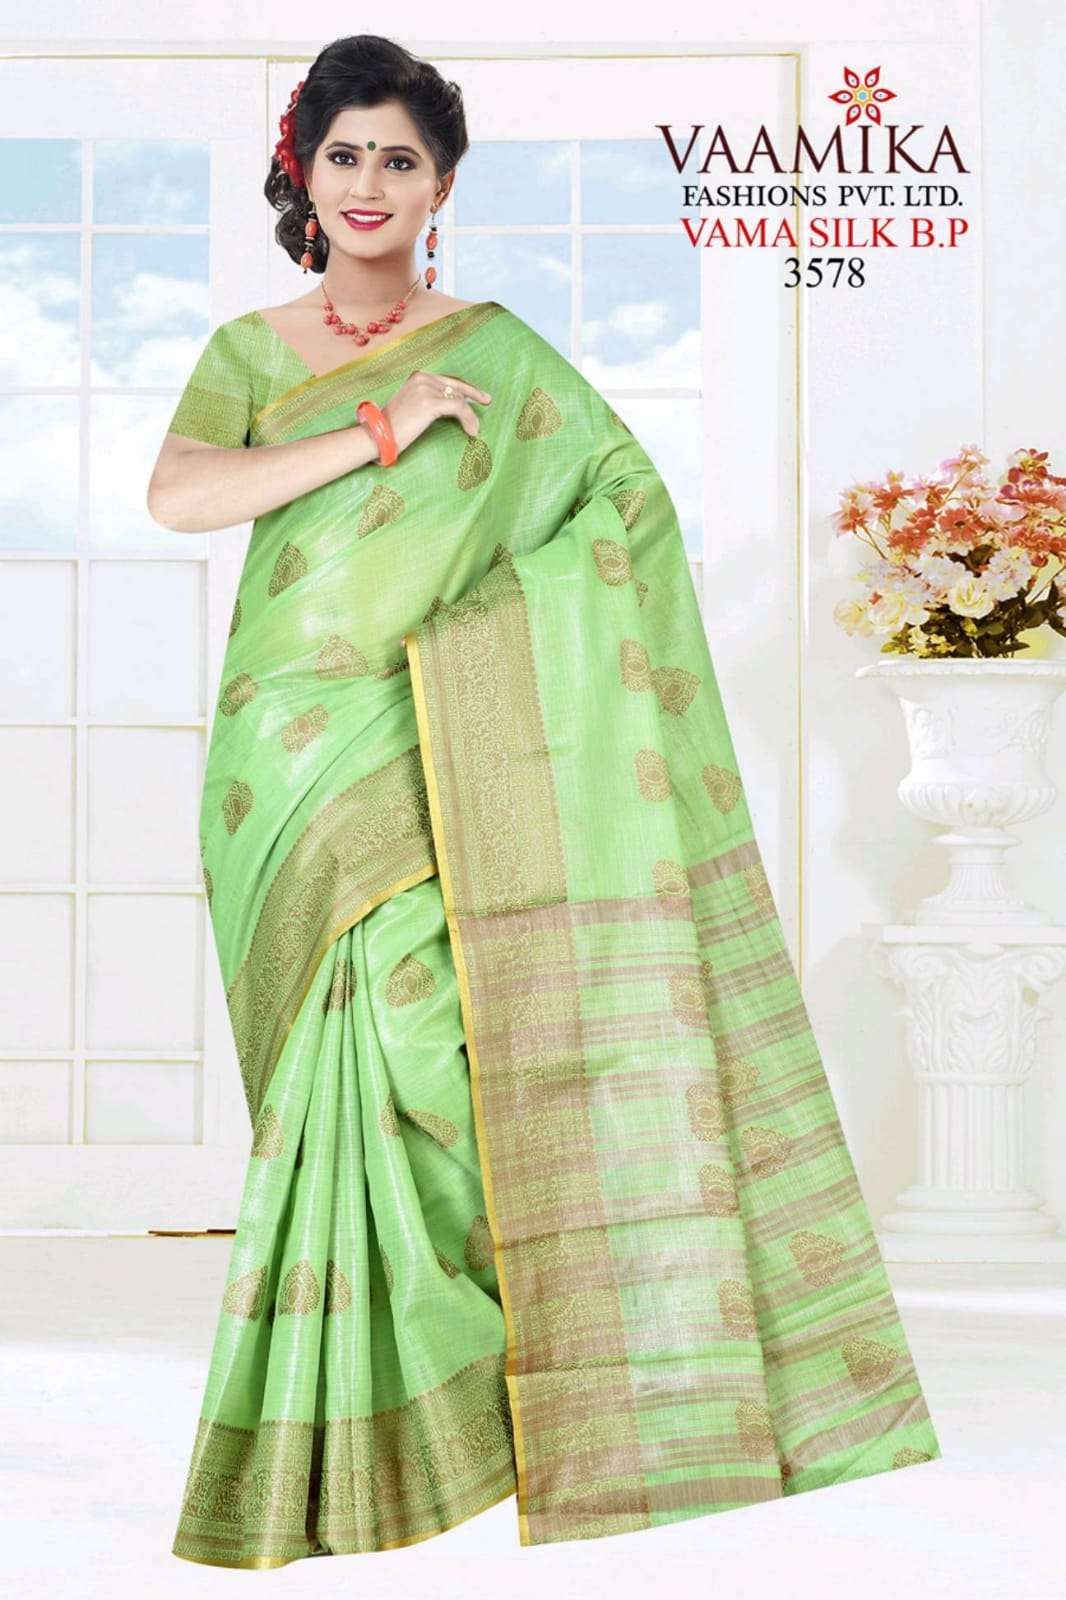 vaamika fashions present vama silk linen traditional wear good looking saree